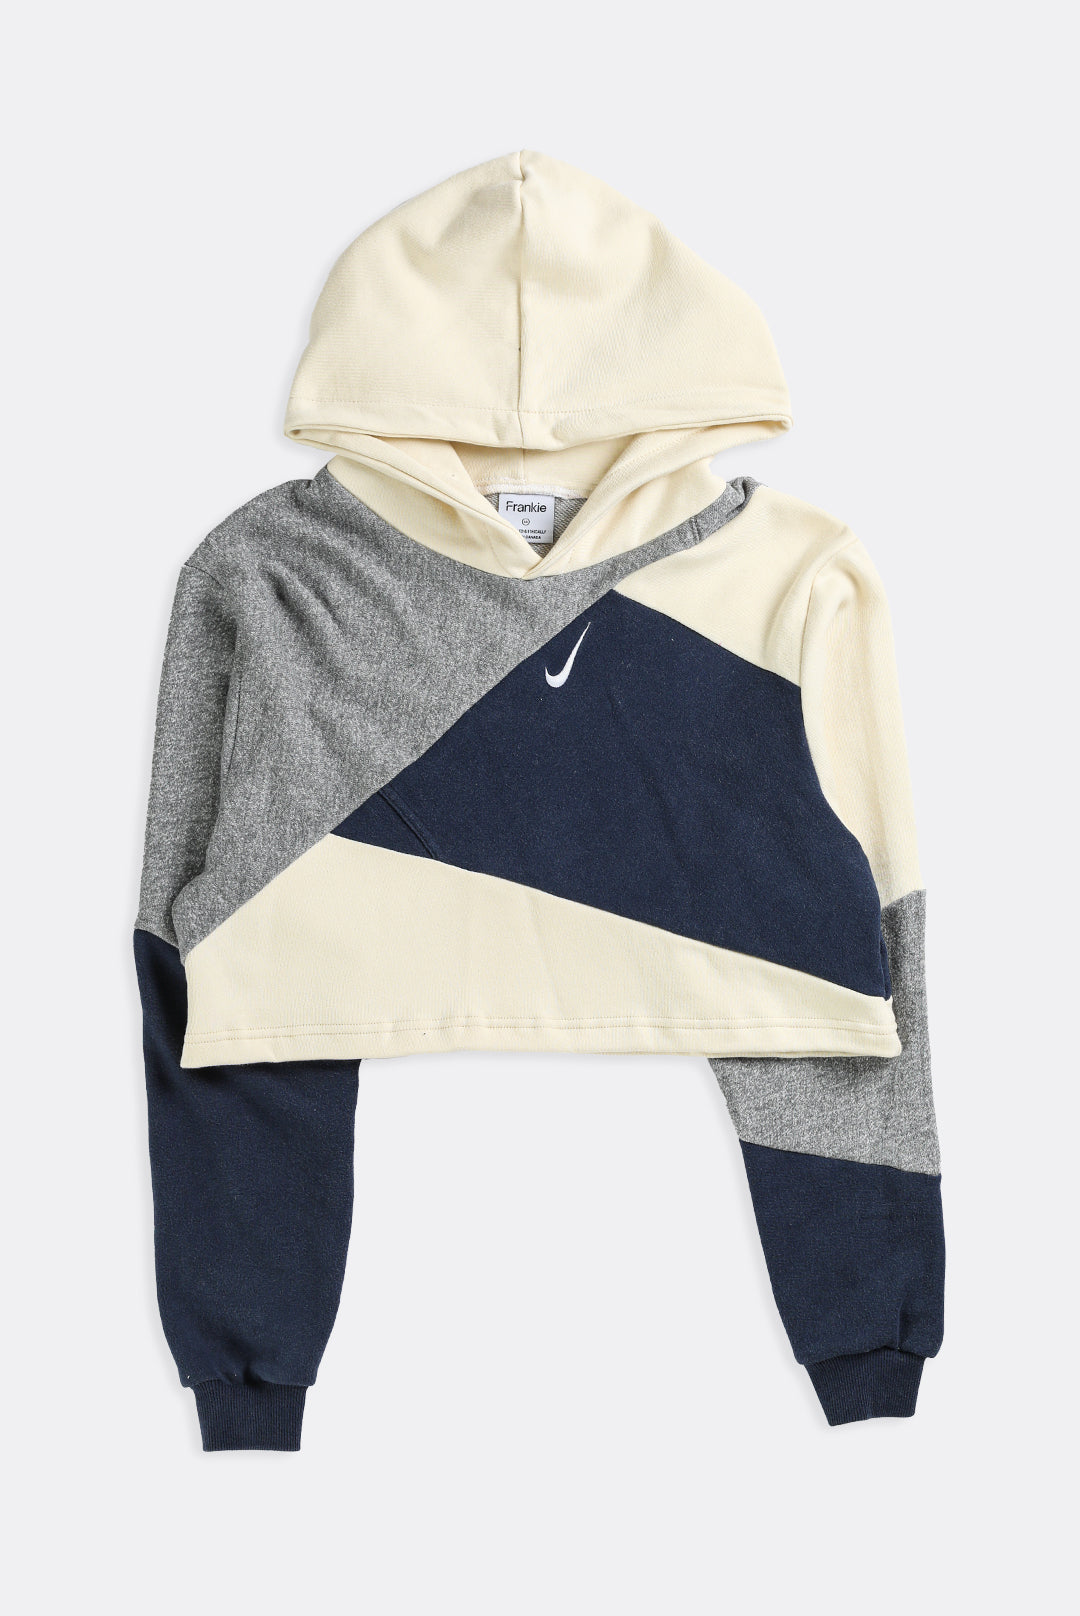 Rework Nike Patchwork Crop Sweatshirt - XS – Frankie Collective